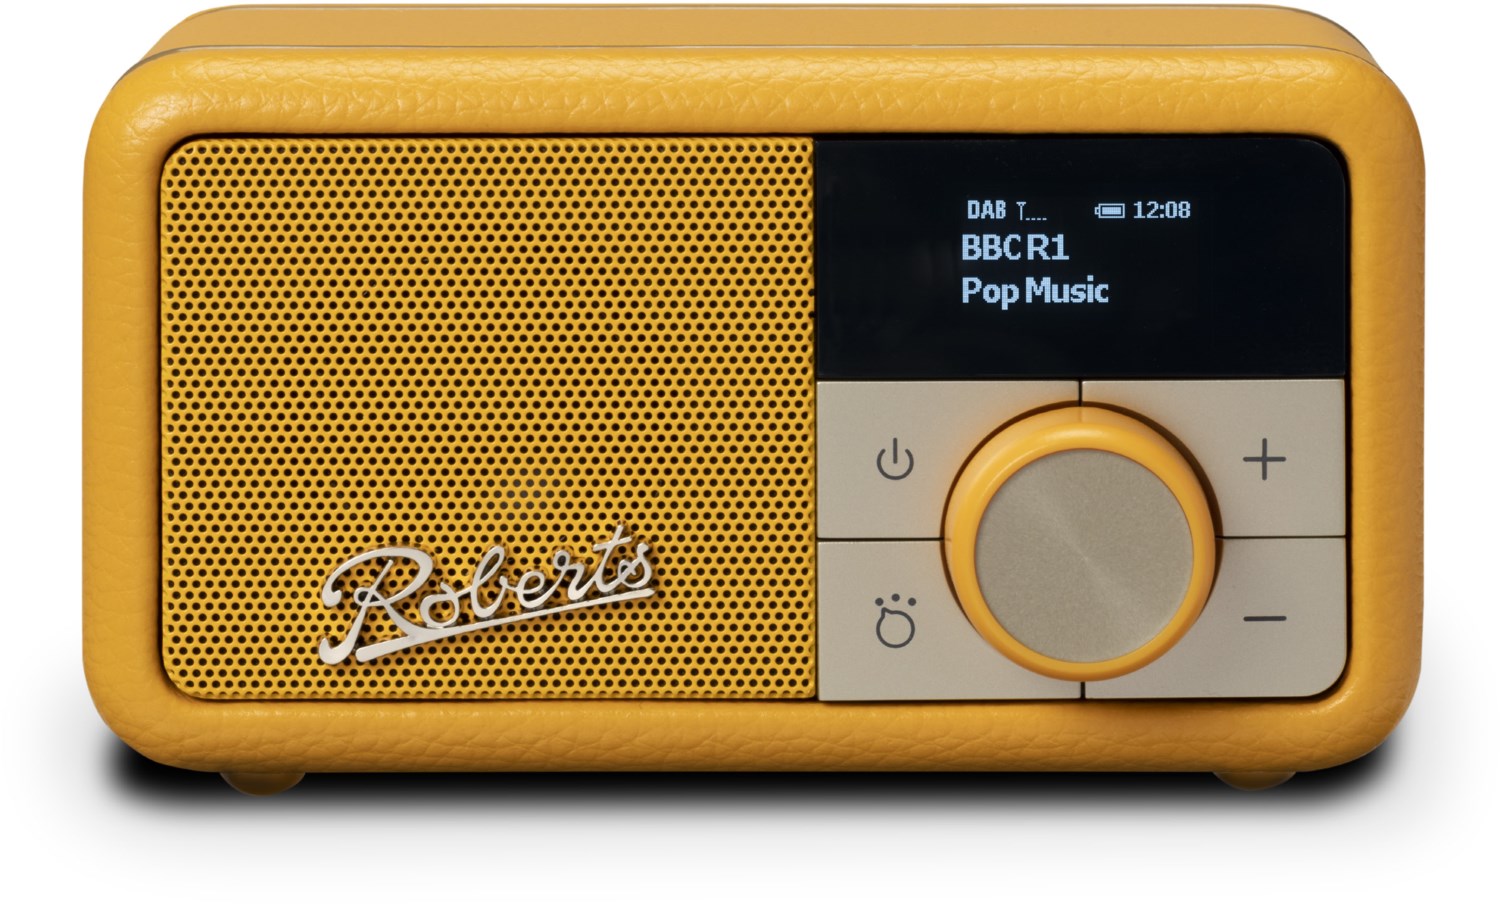 Revival Petite Kofferradio sunshine yellow von Roberts